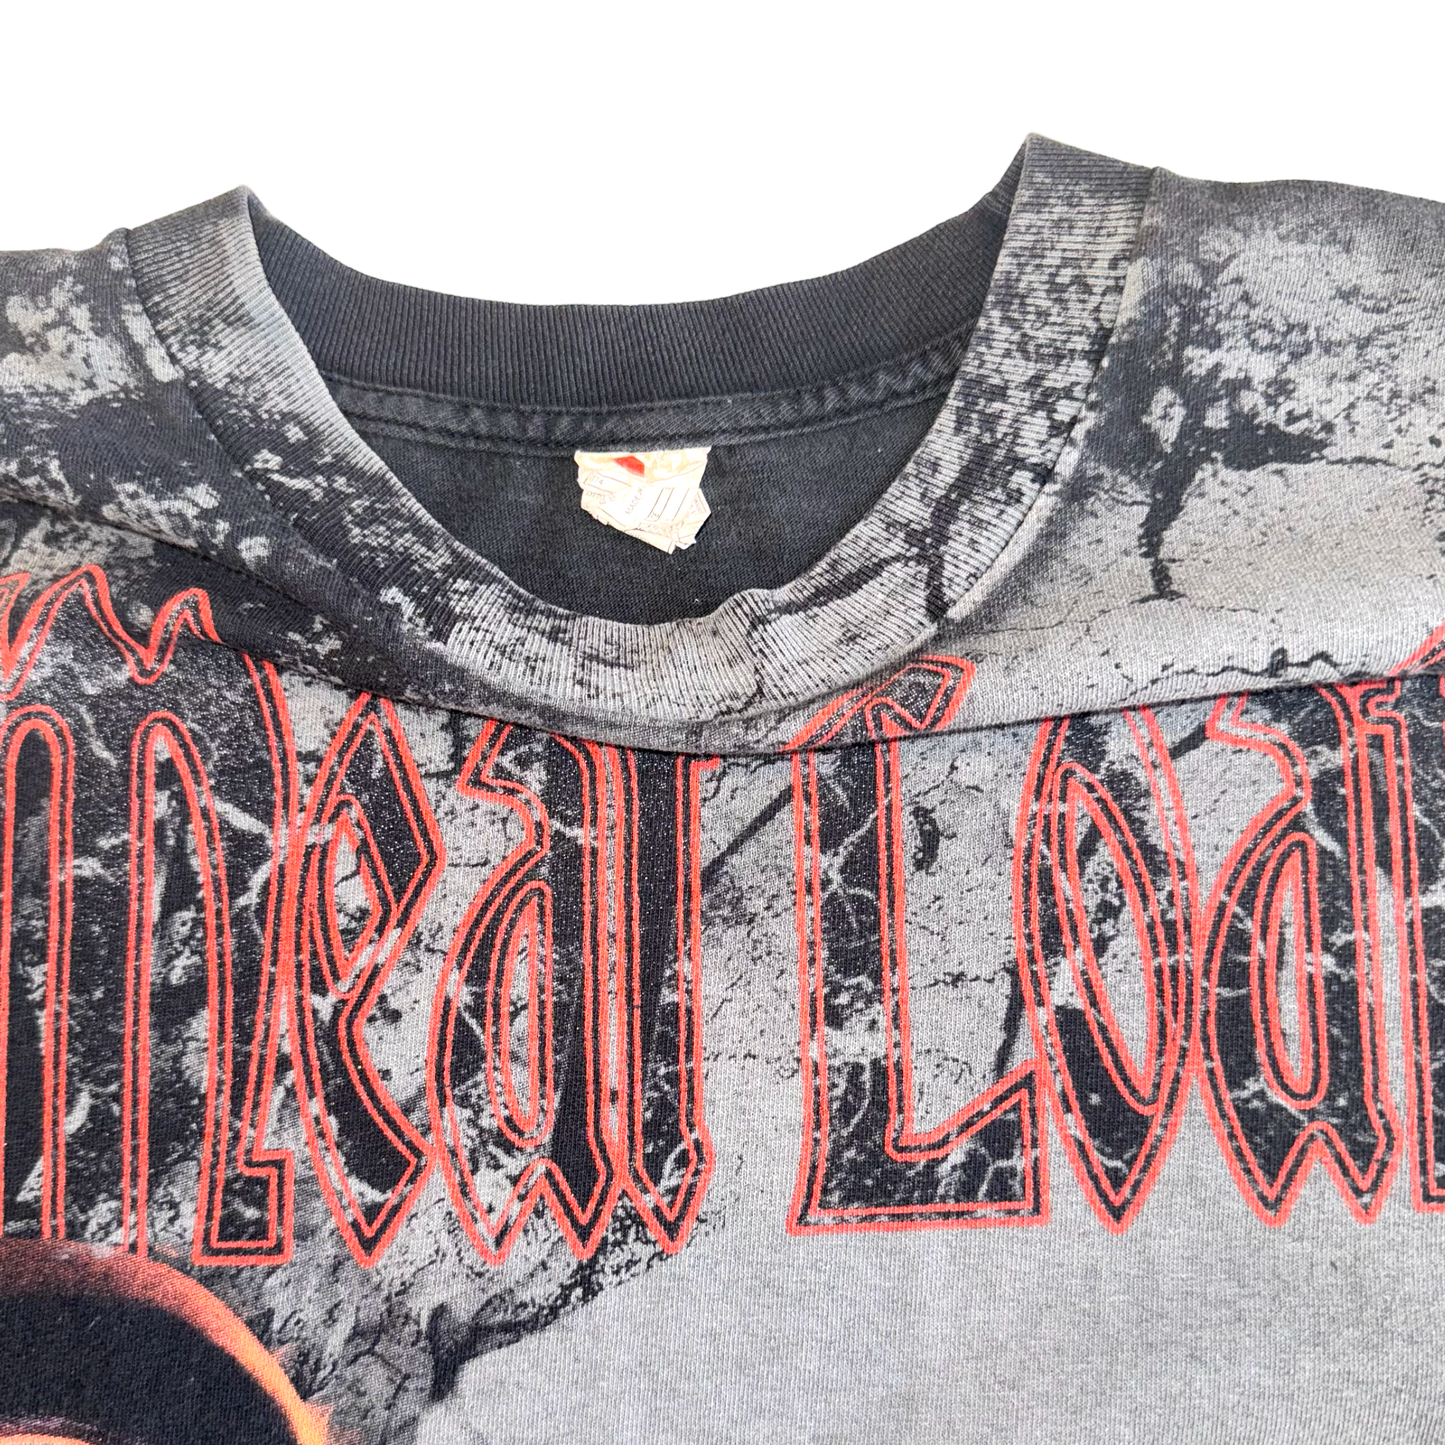 Alstyle - Meat Loaf AOP 2010 Tour Vintage T-Shirt